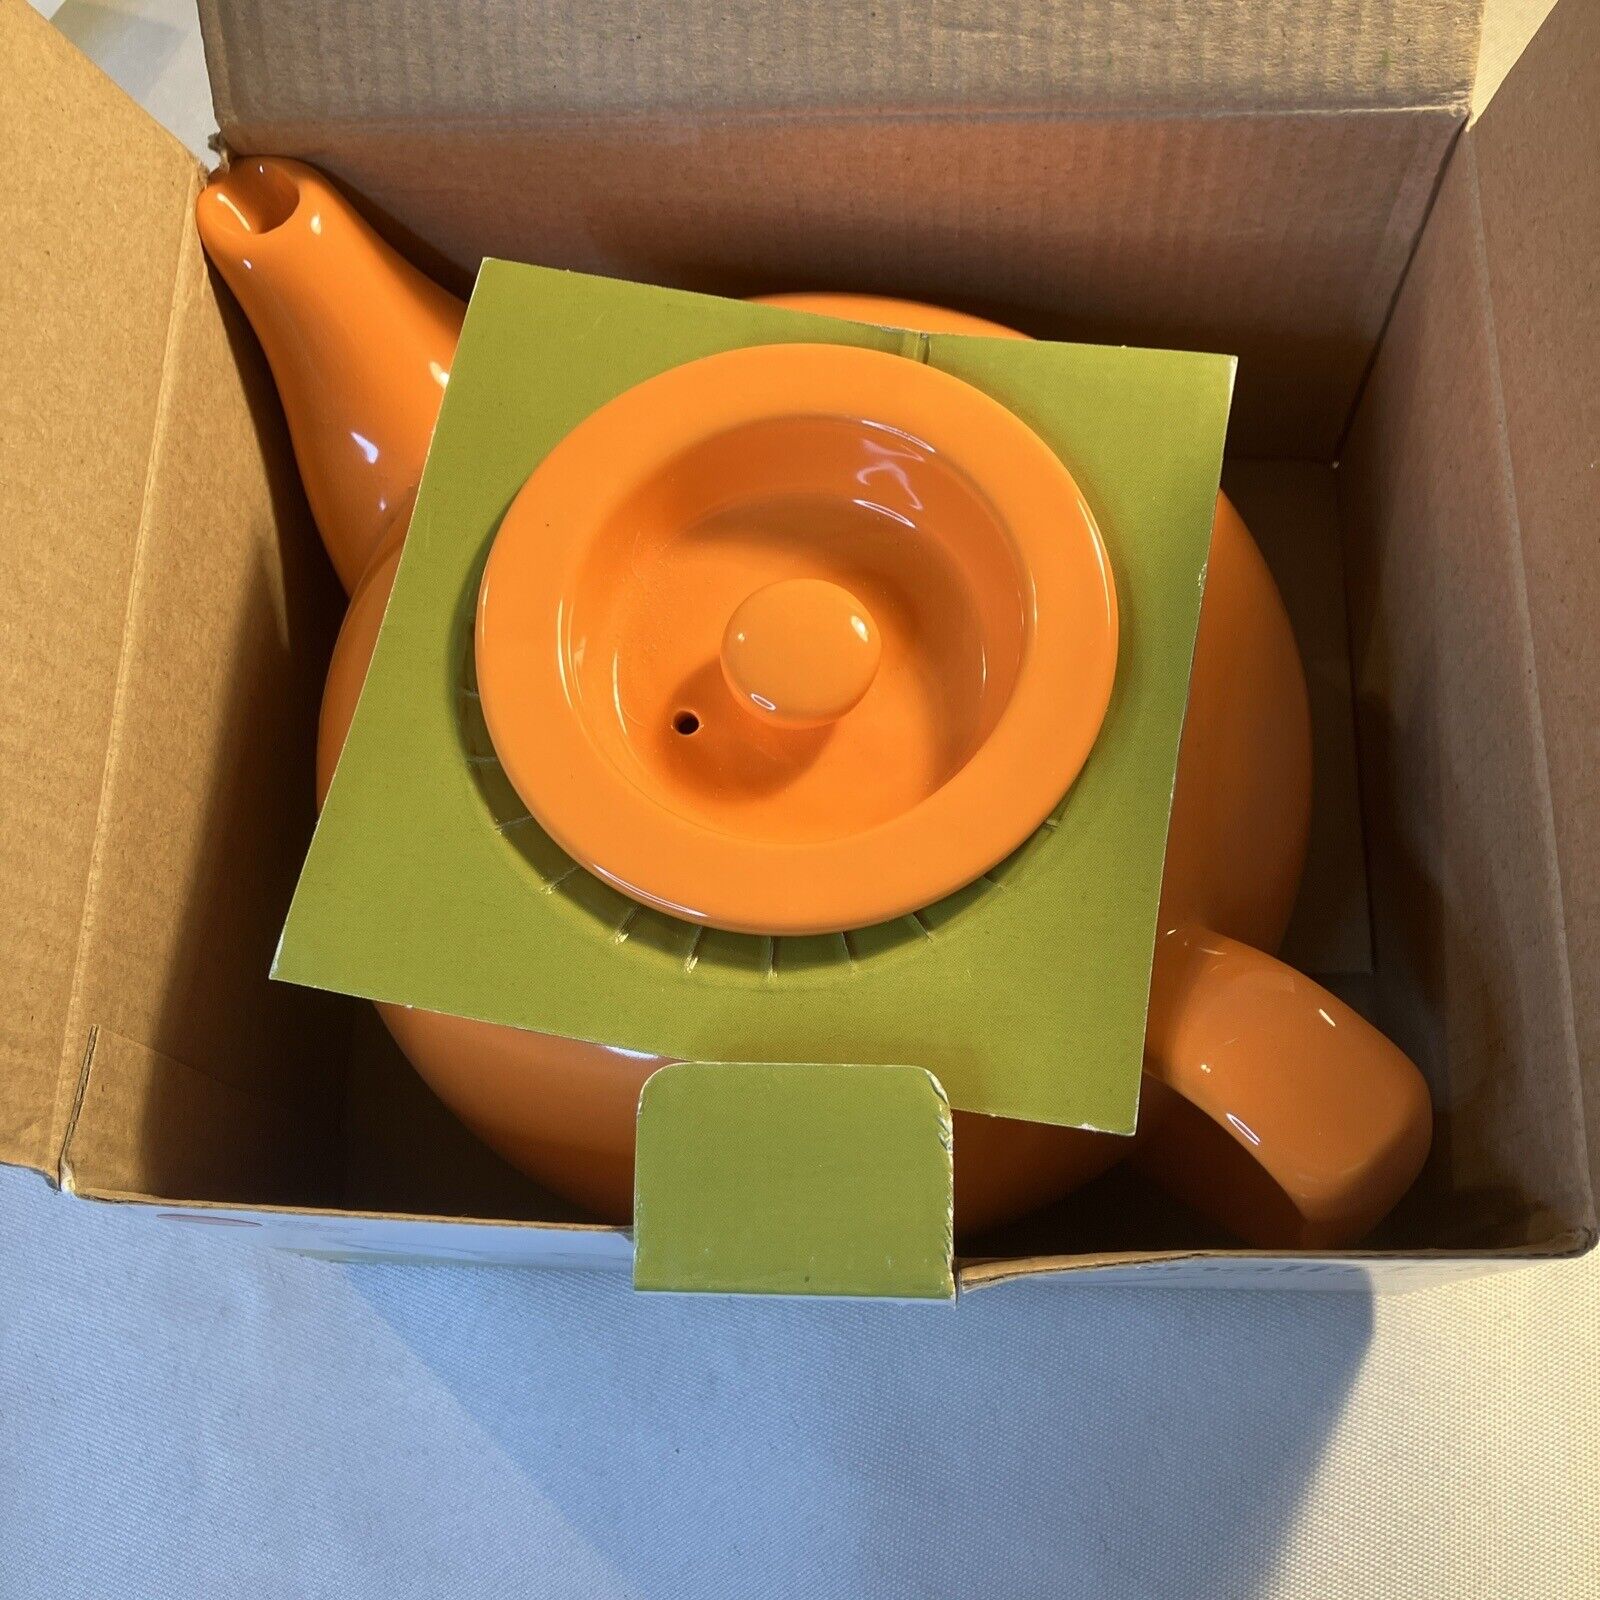 PersonaliTEA Porcelain Teapot - Orange -  Stainless Steel Infuser/Basket